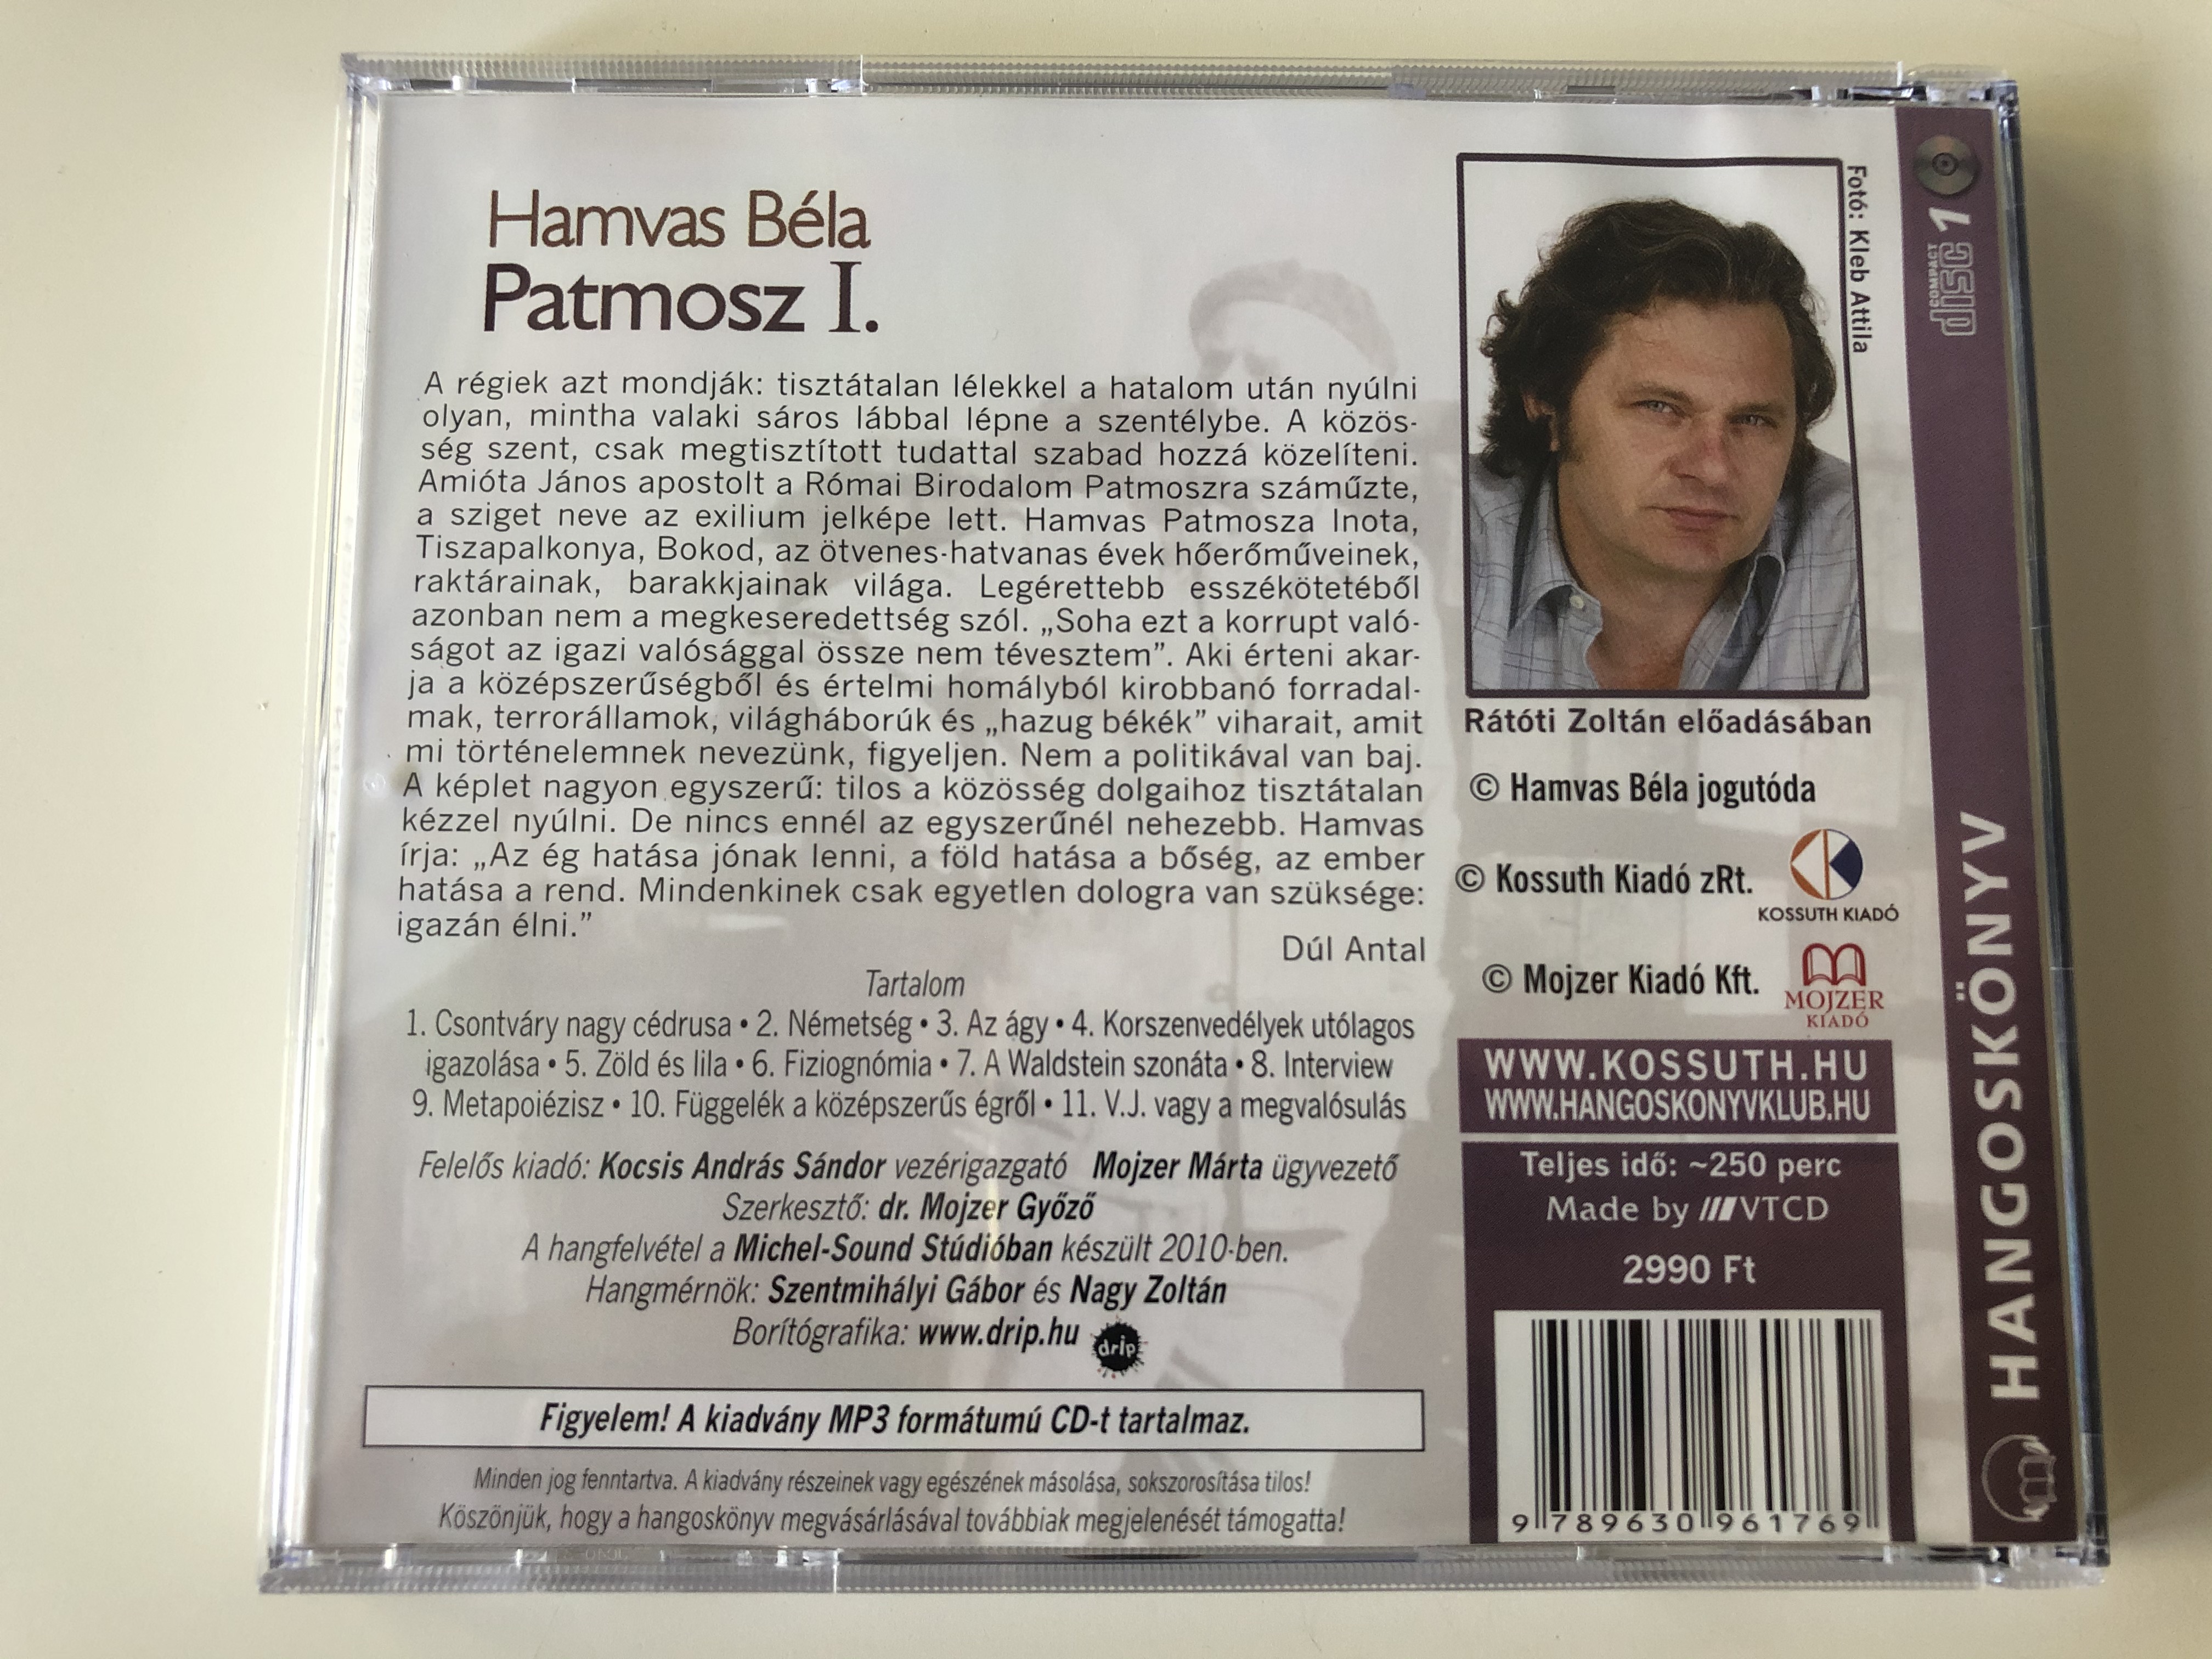 hamvas-b-la-patmosz-i.-ratoti-zoltan-eloadasaban-kossuth-audio-cd-2990-ft-4-.jpg